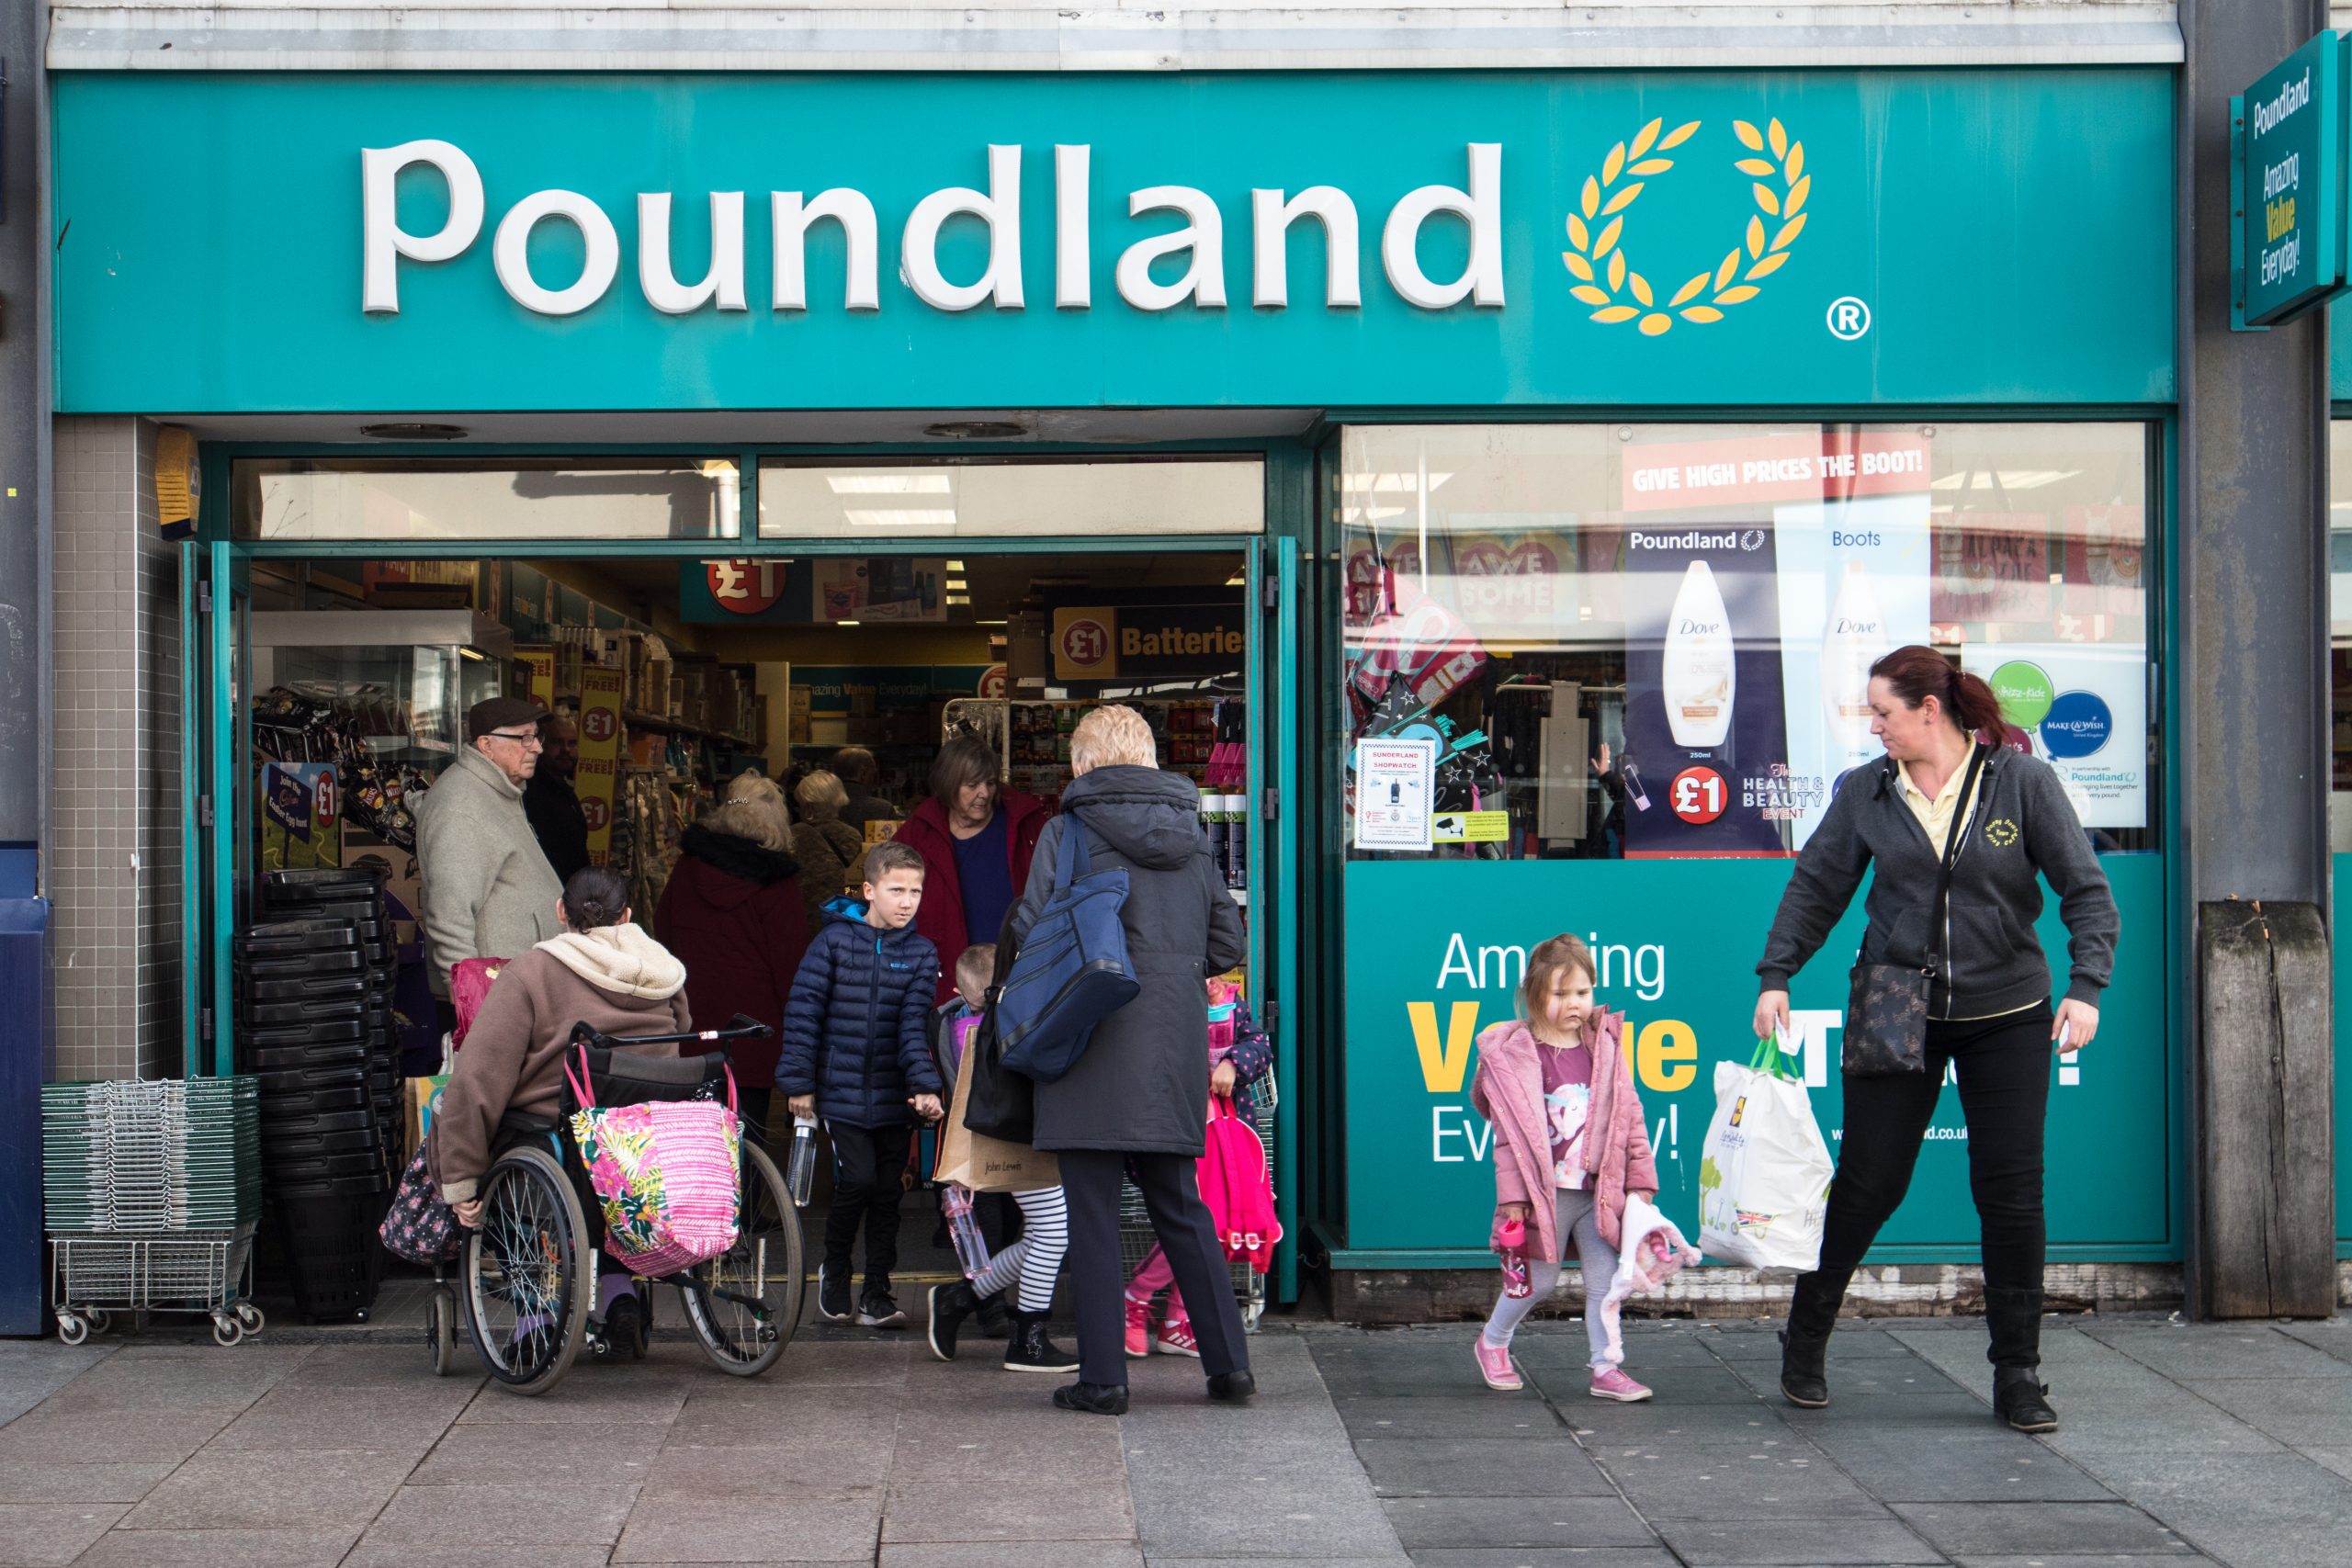 Poundland Local – No plans for NI yet